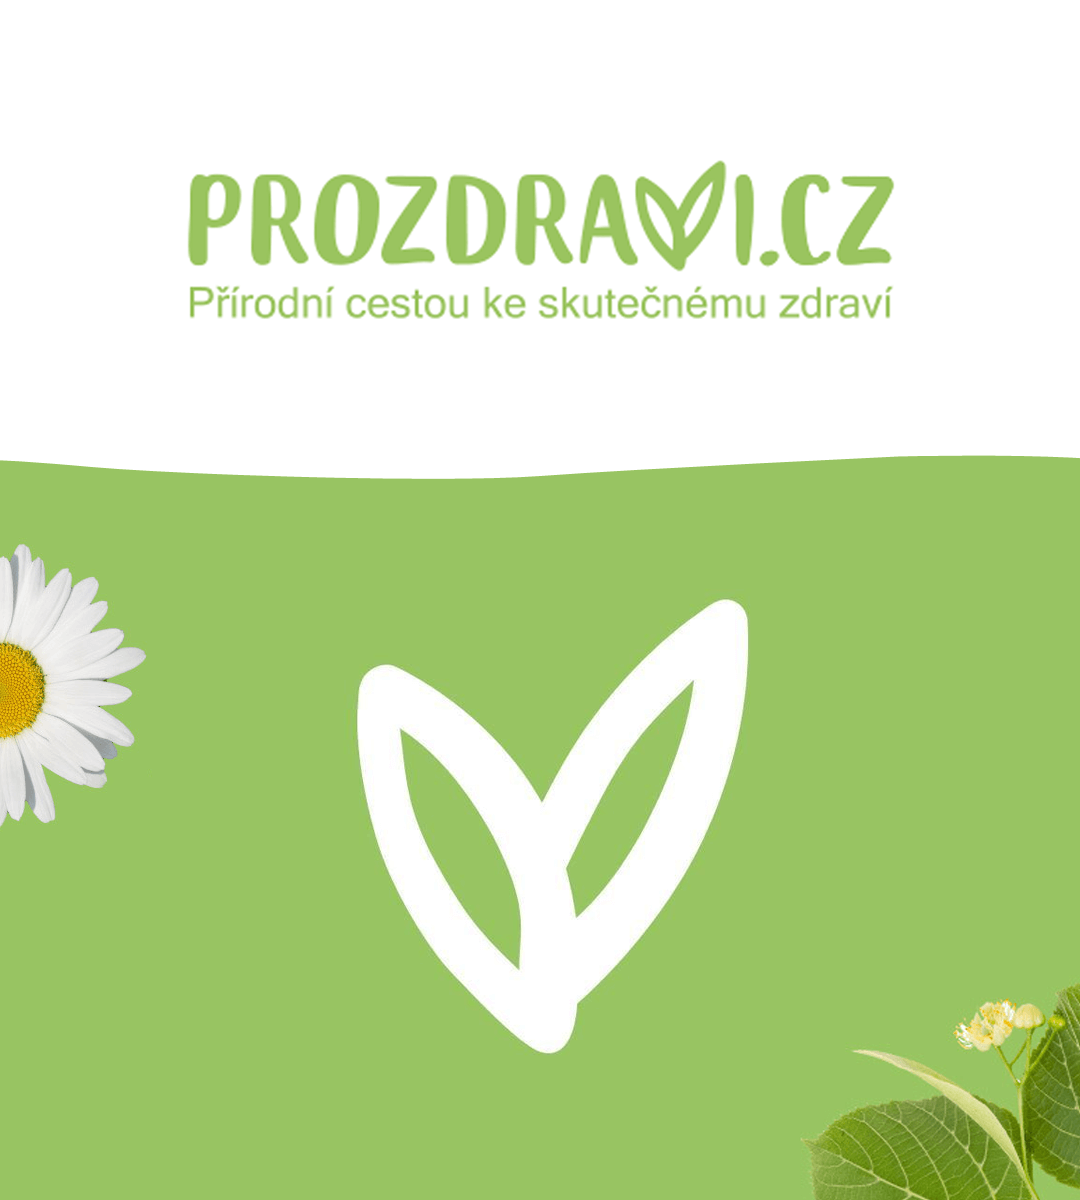 Prozdravi.cz